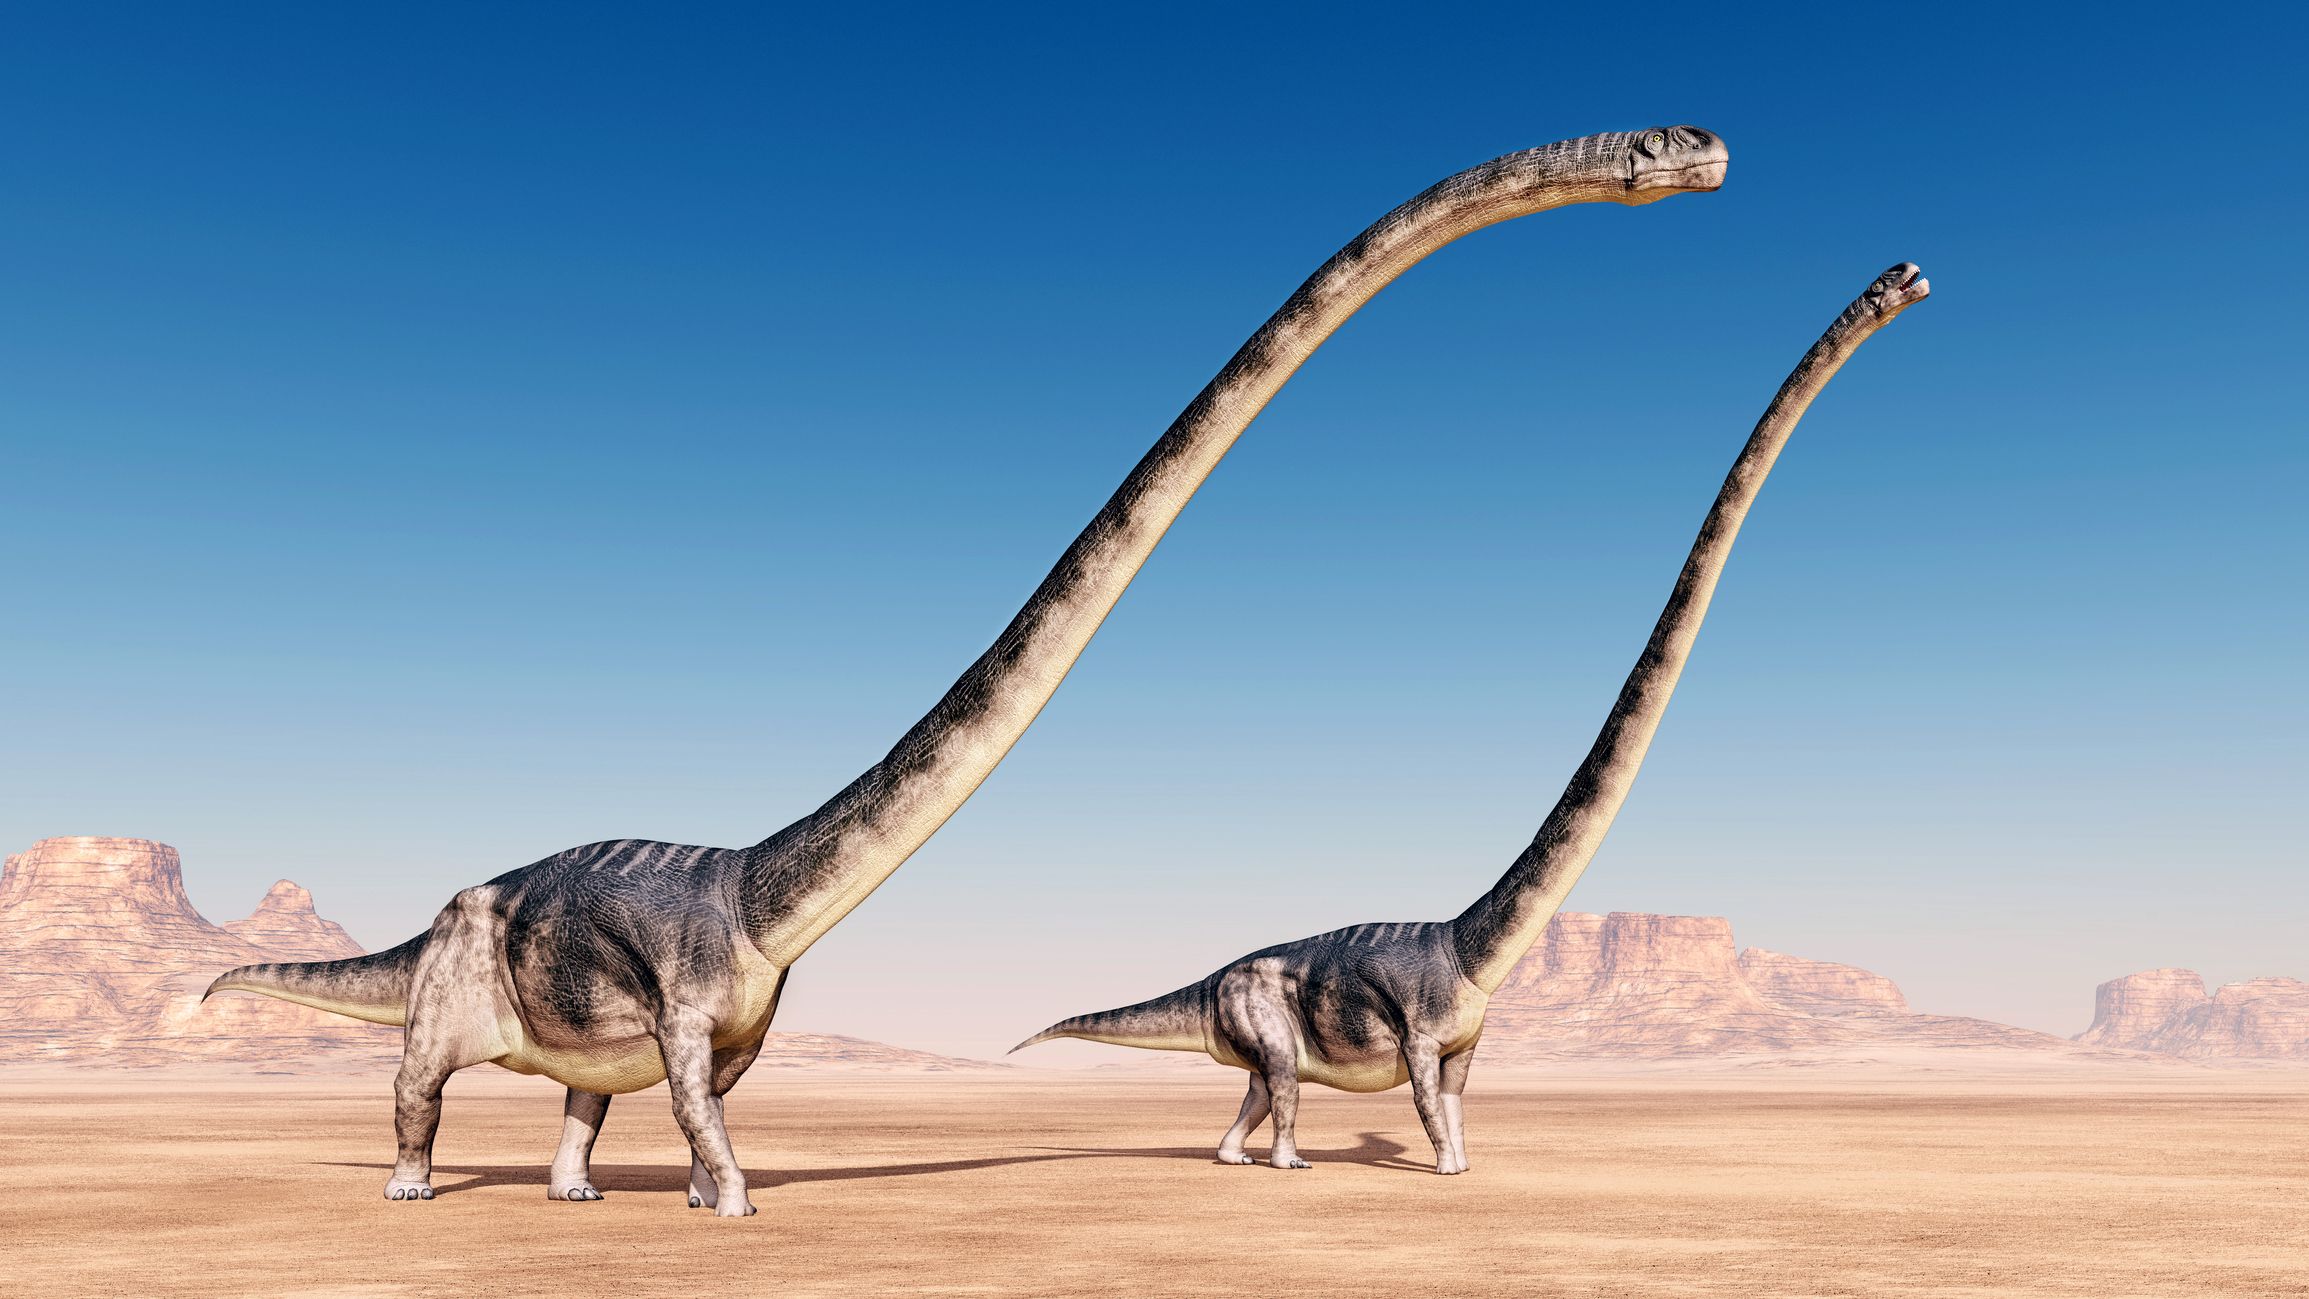 Lavocatisaurus Agrioensis New 40FootLong Dinosaur Species Discovered